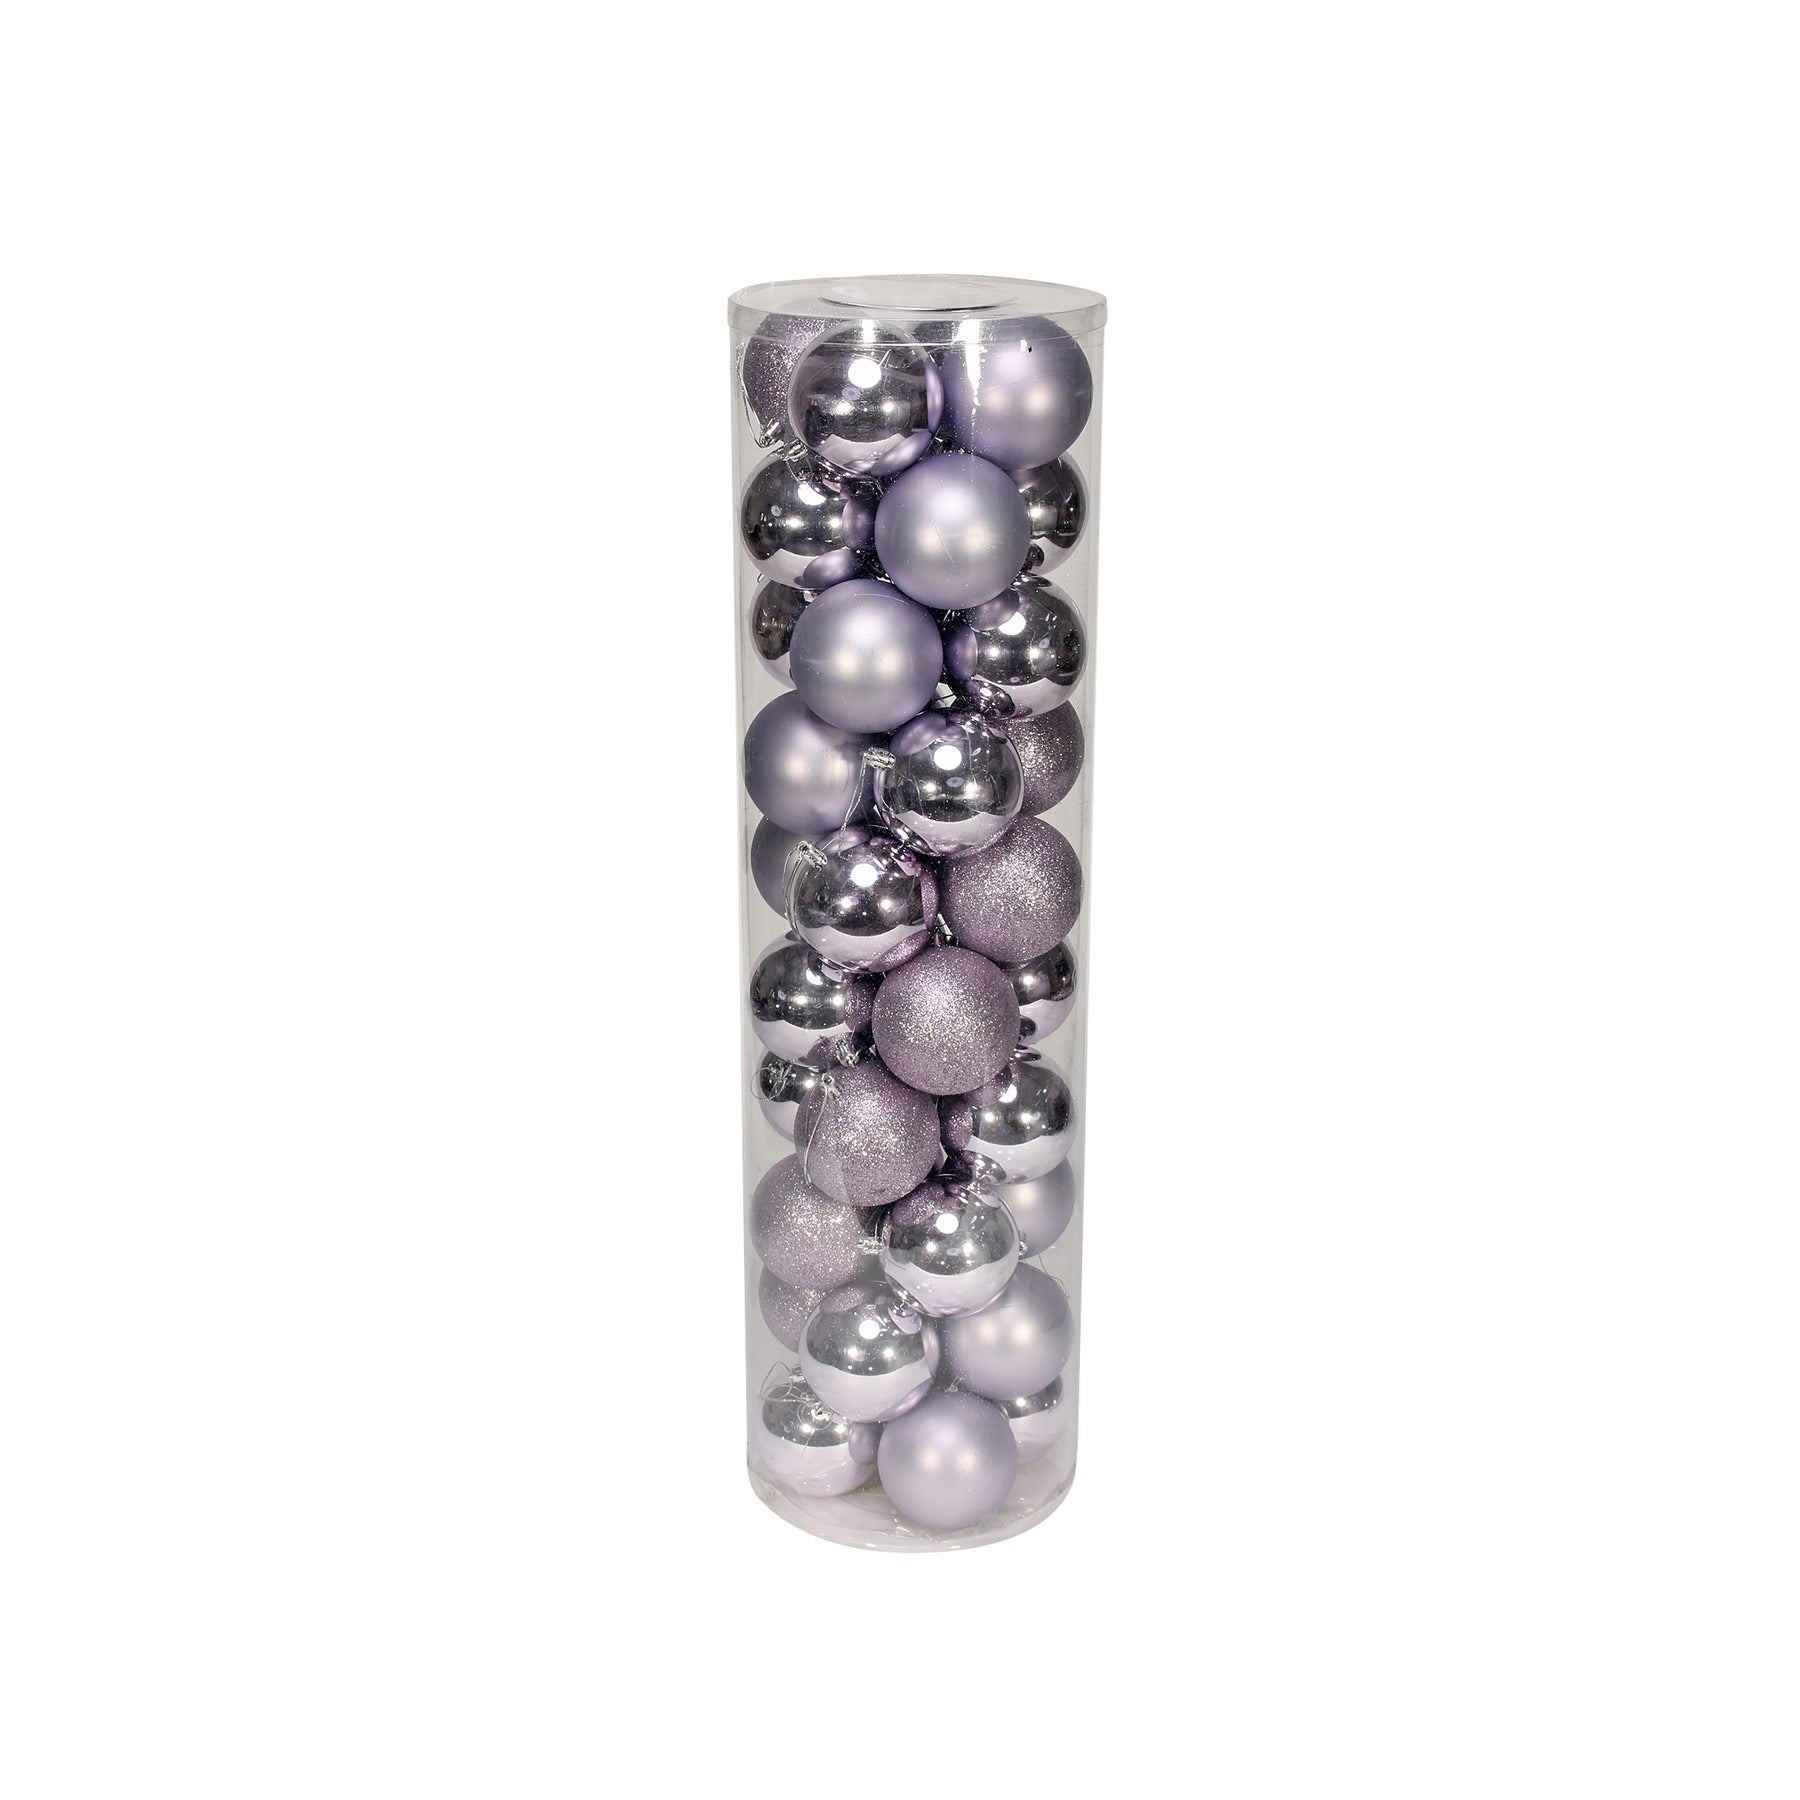 View 40 Lilac Baubles in Matt Shiny Glitter Finish 8cm information